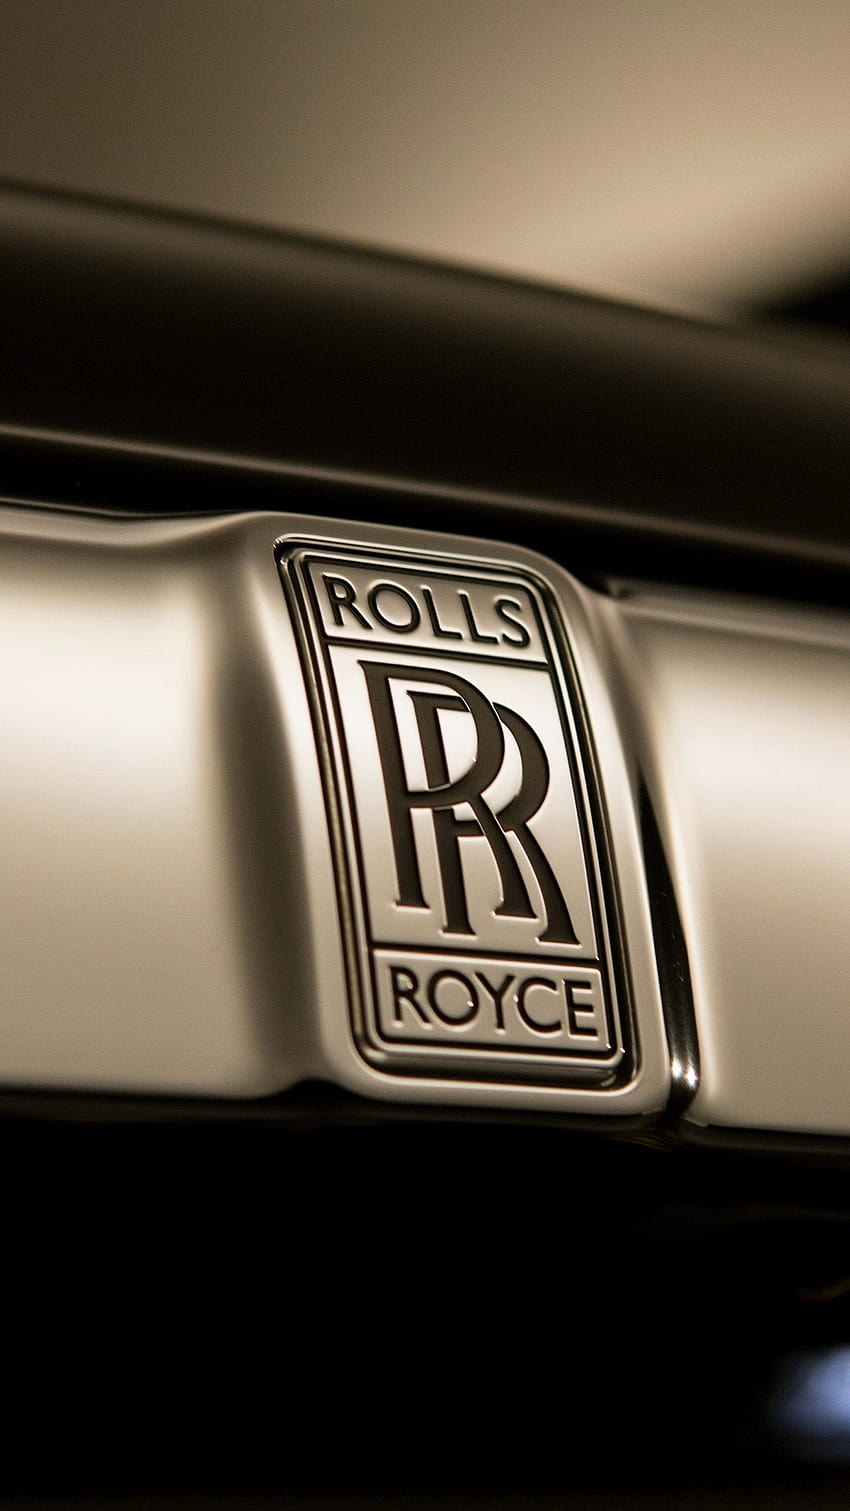 A rolls royce emblem on a black car photo – Free Logo Image on Unsplash